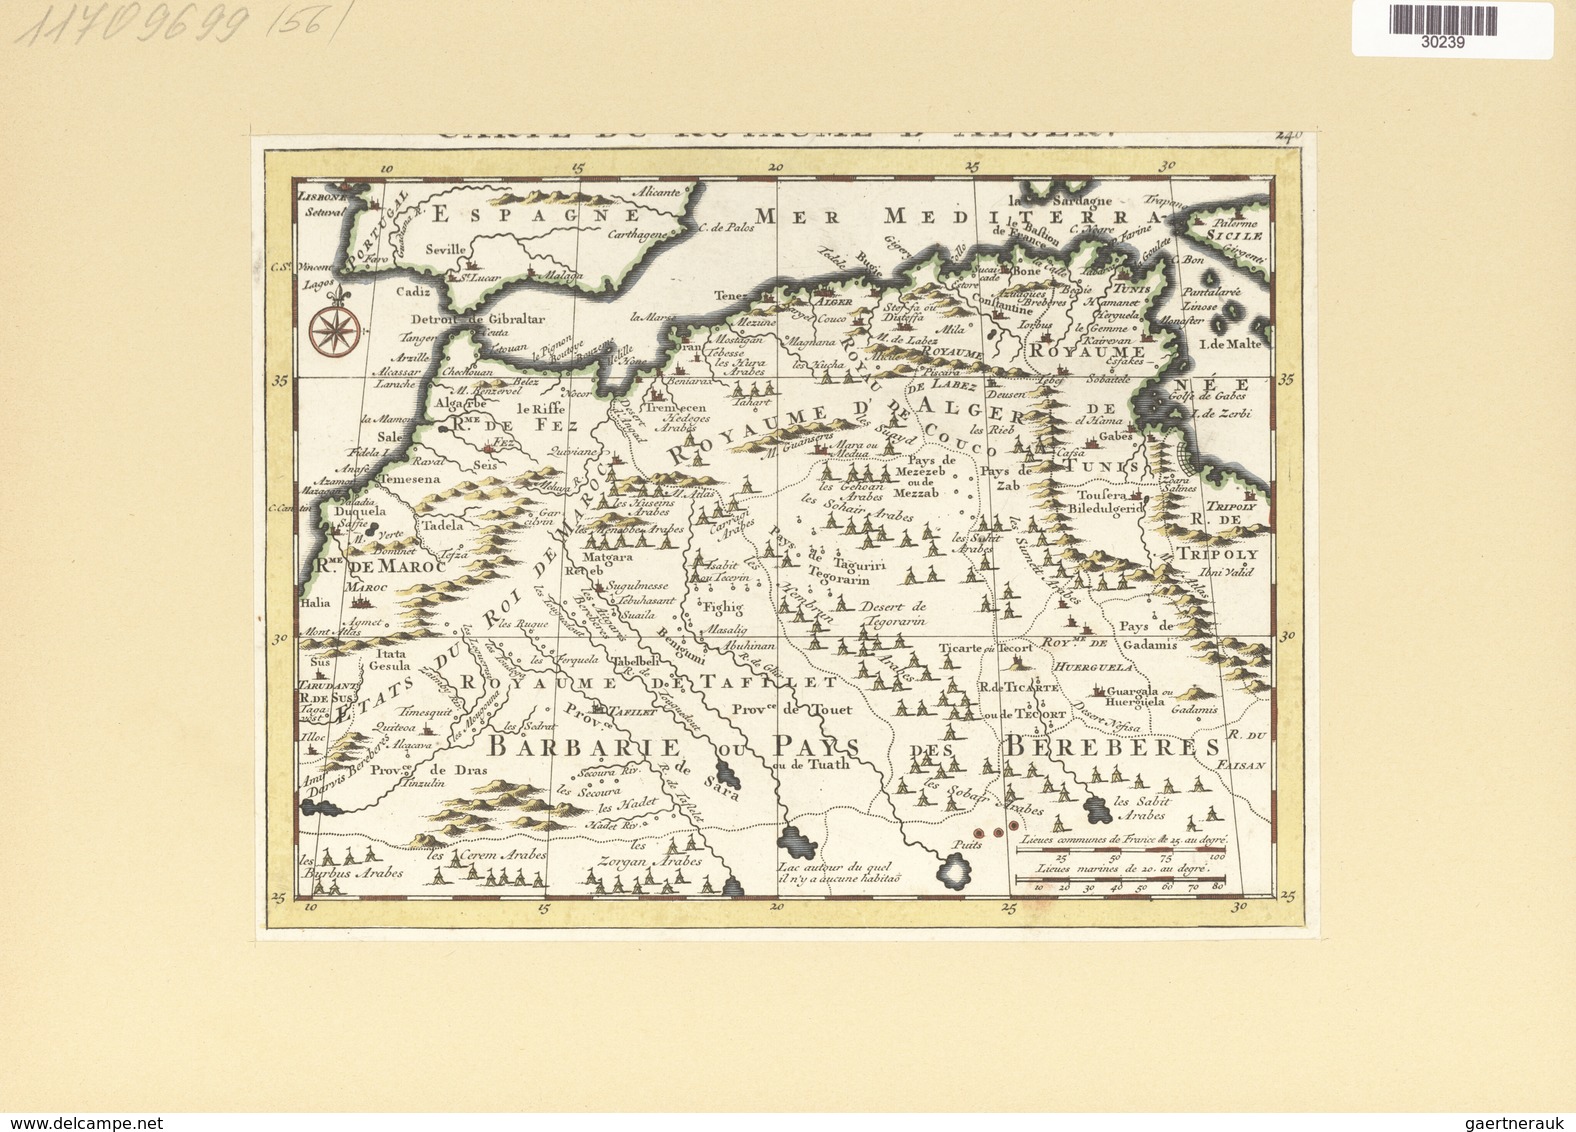 Landkarten Und Stiche: 1734. Carte Du Royaume D' Alger, As Published In The Mercator Atlas Minor 173 - Geografía